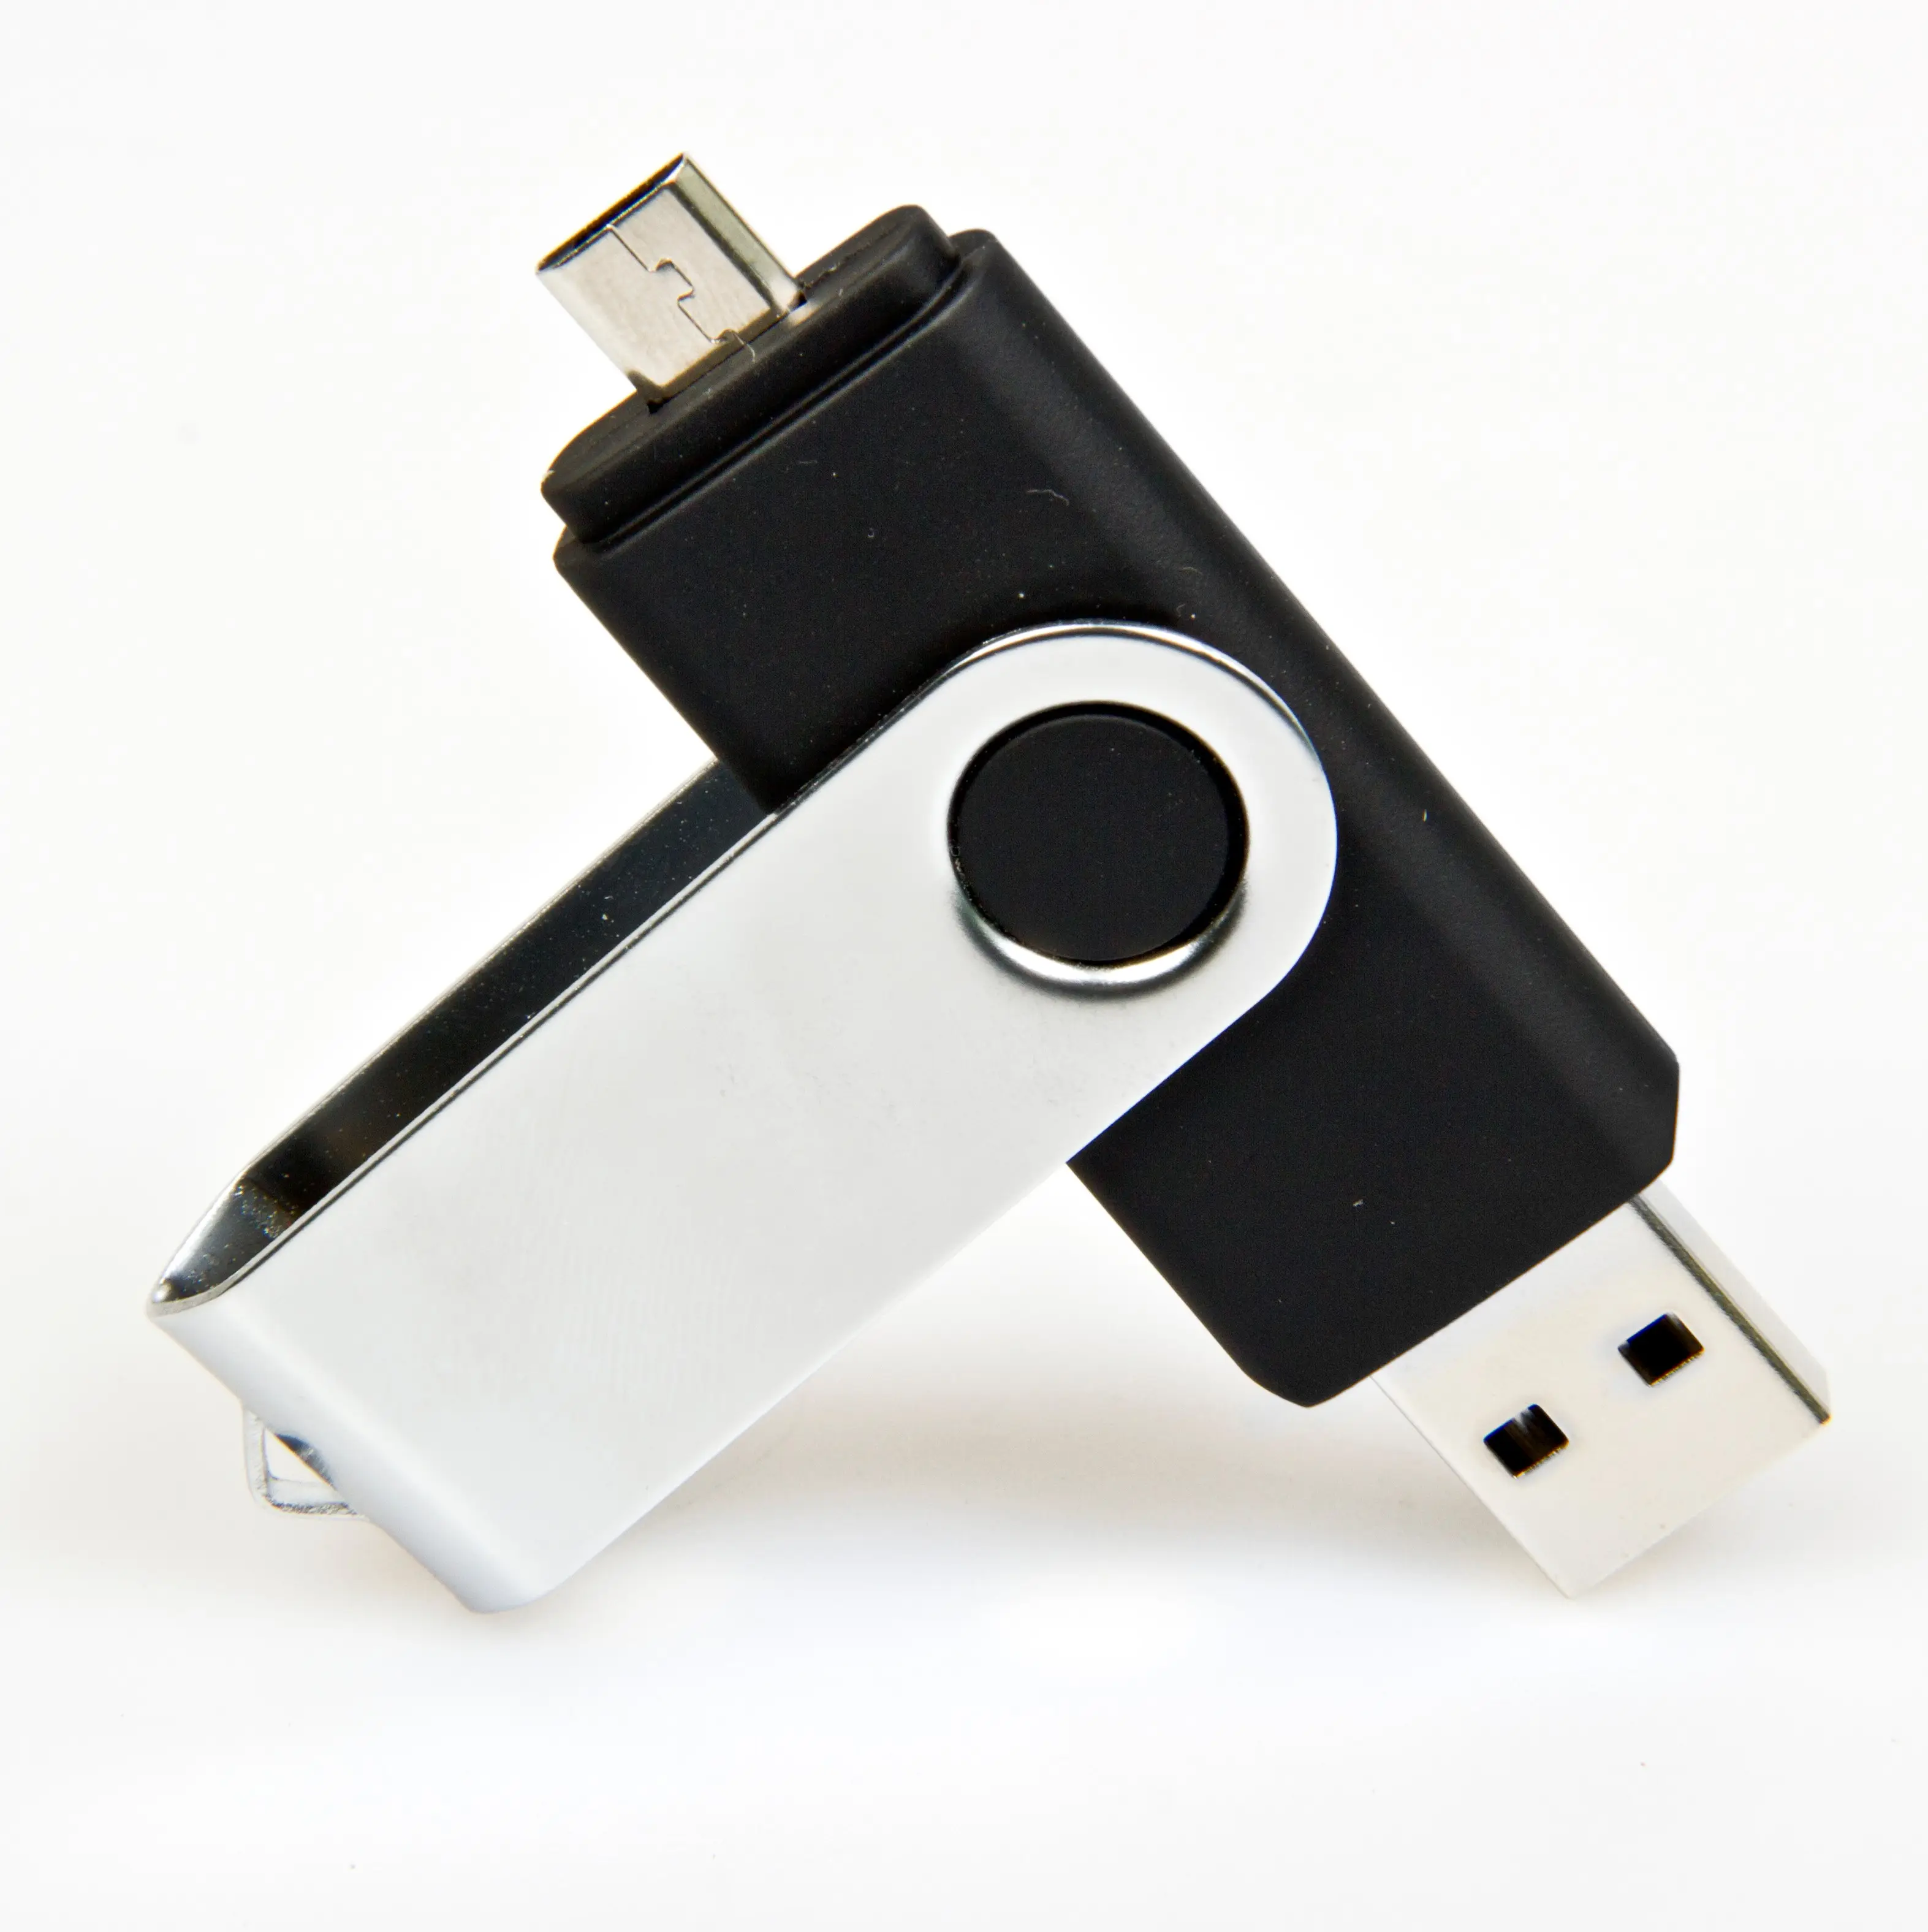 OTG USB flash drive 8GB 16GB 32GB 64GB 128GB Type C USB3.1 key for smart phone pen drive memoria memory stick flash disk